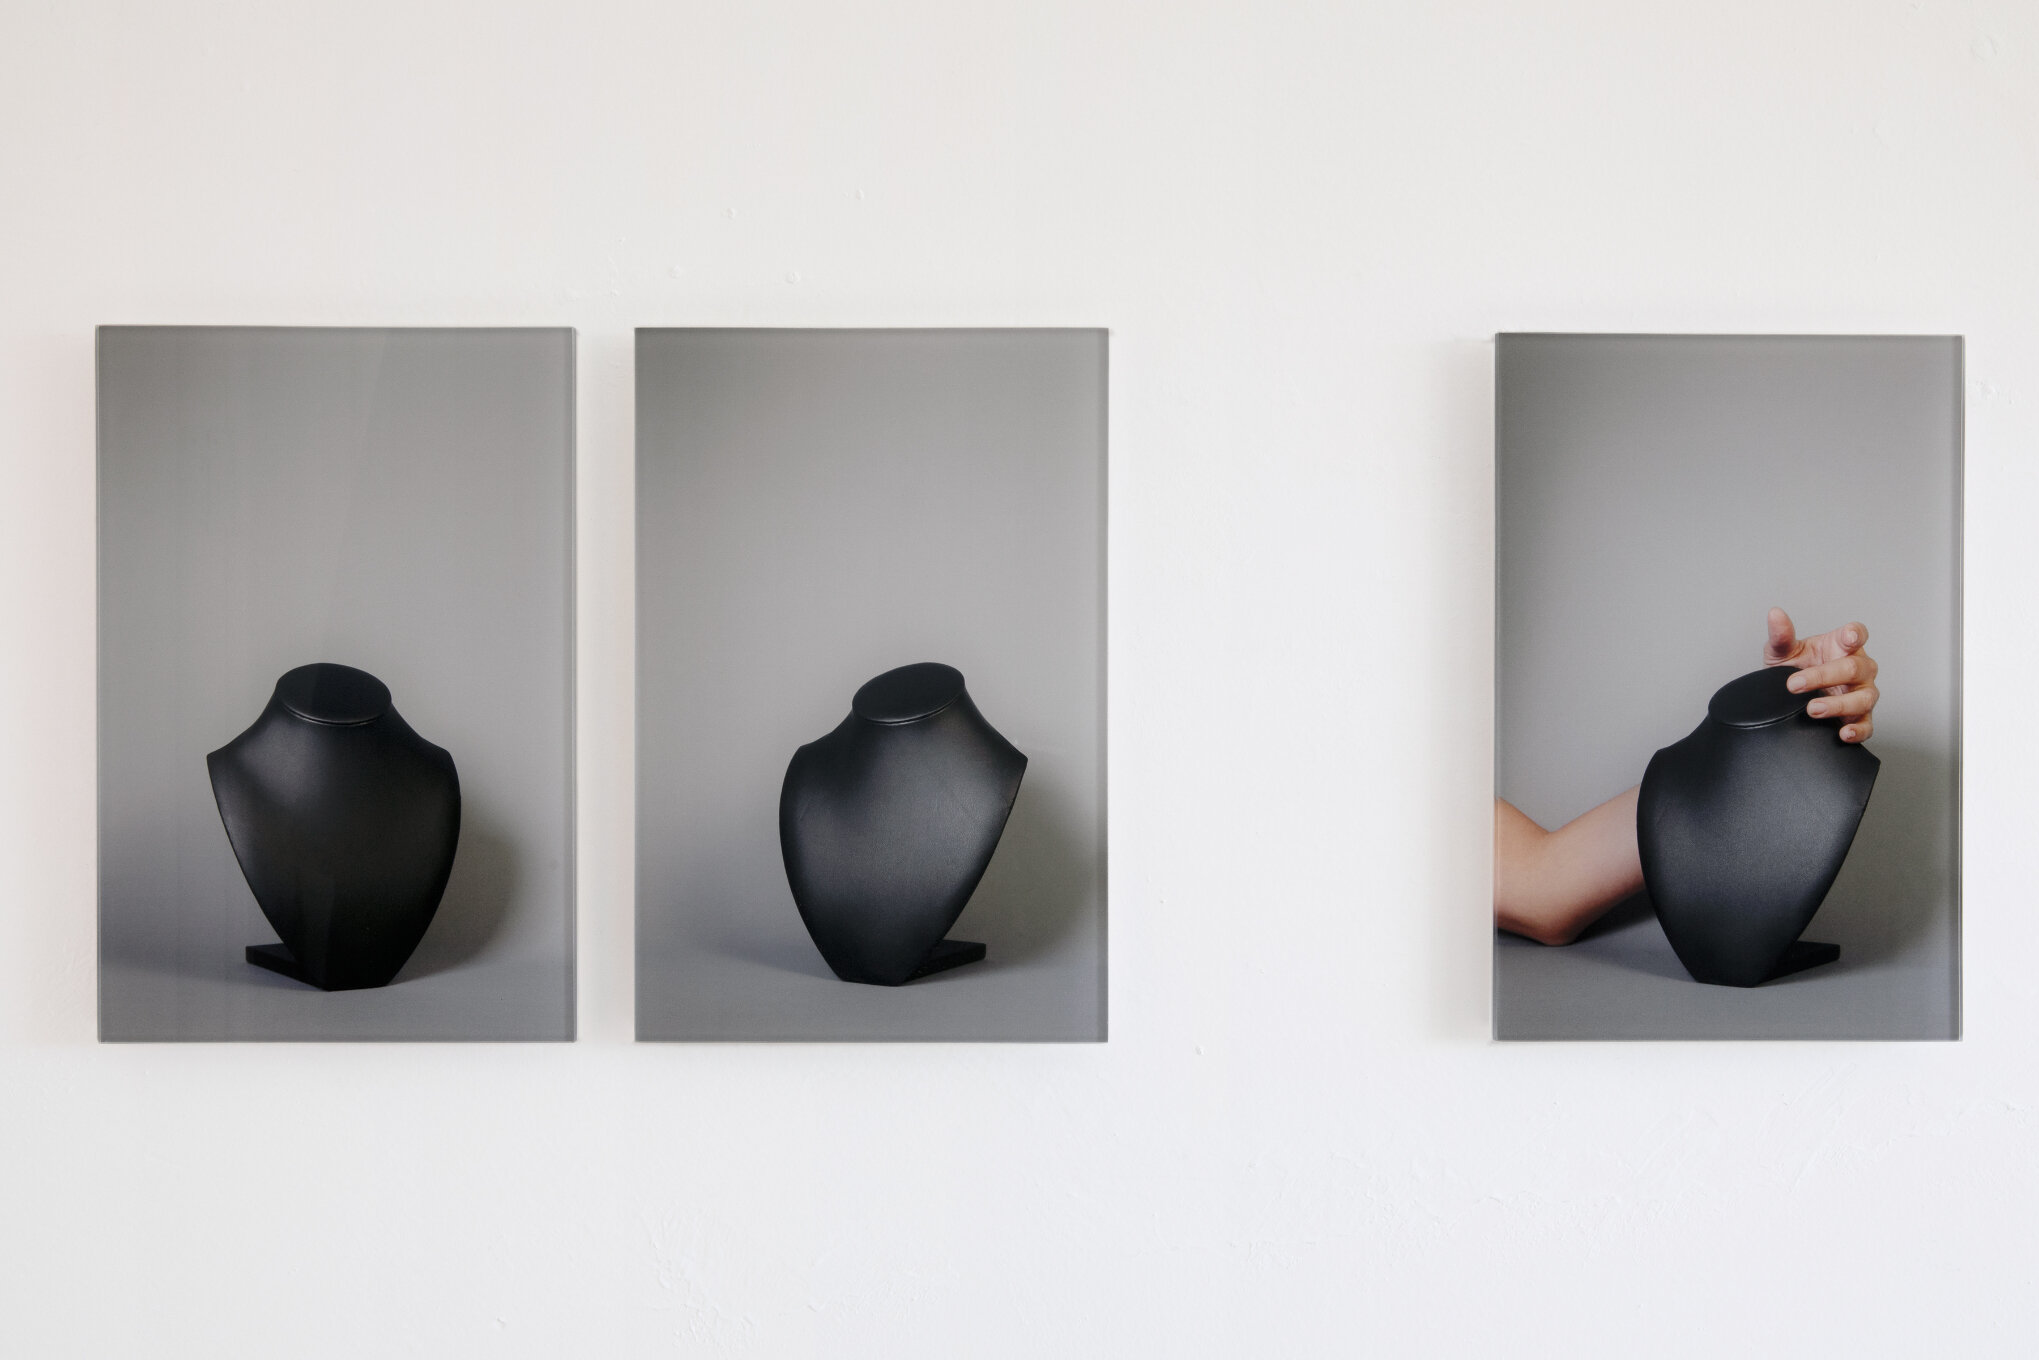  KIM SCHOEN  SKU 0360 (1), SKU 0360 (2), SKU 0360 (3) , 2013 12 x 8 in (30.48 x 20.32 cm) each Light-jet print face-mounted to plexi 